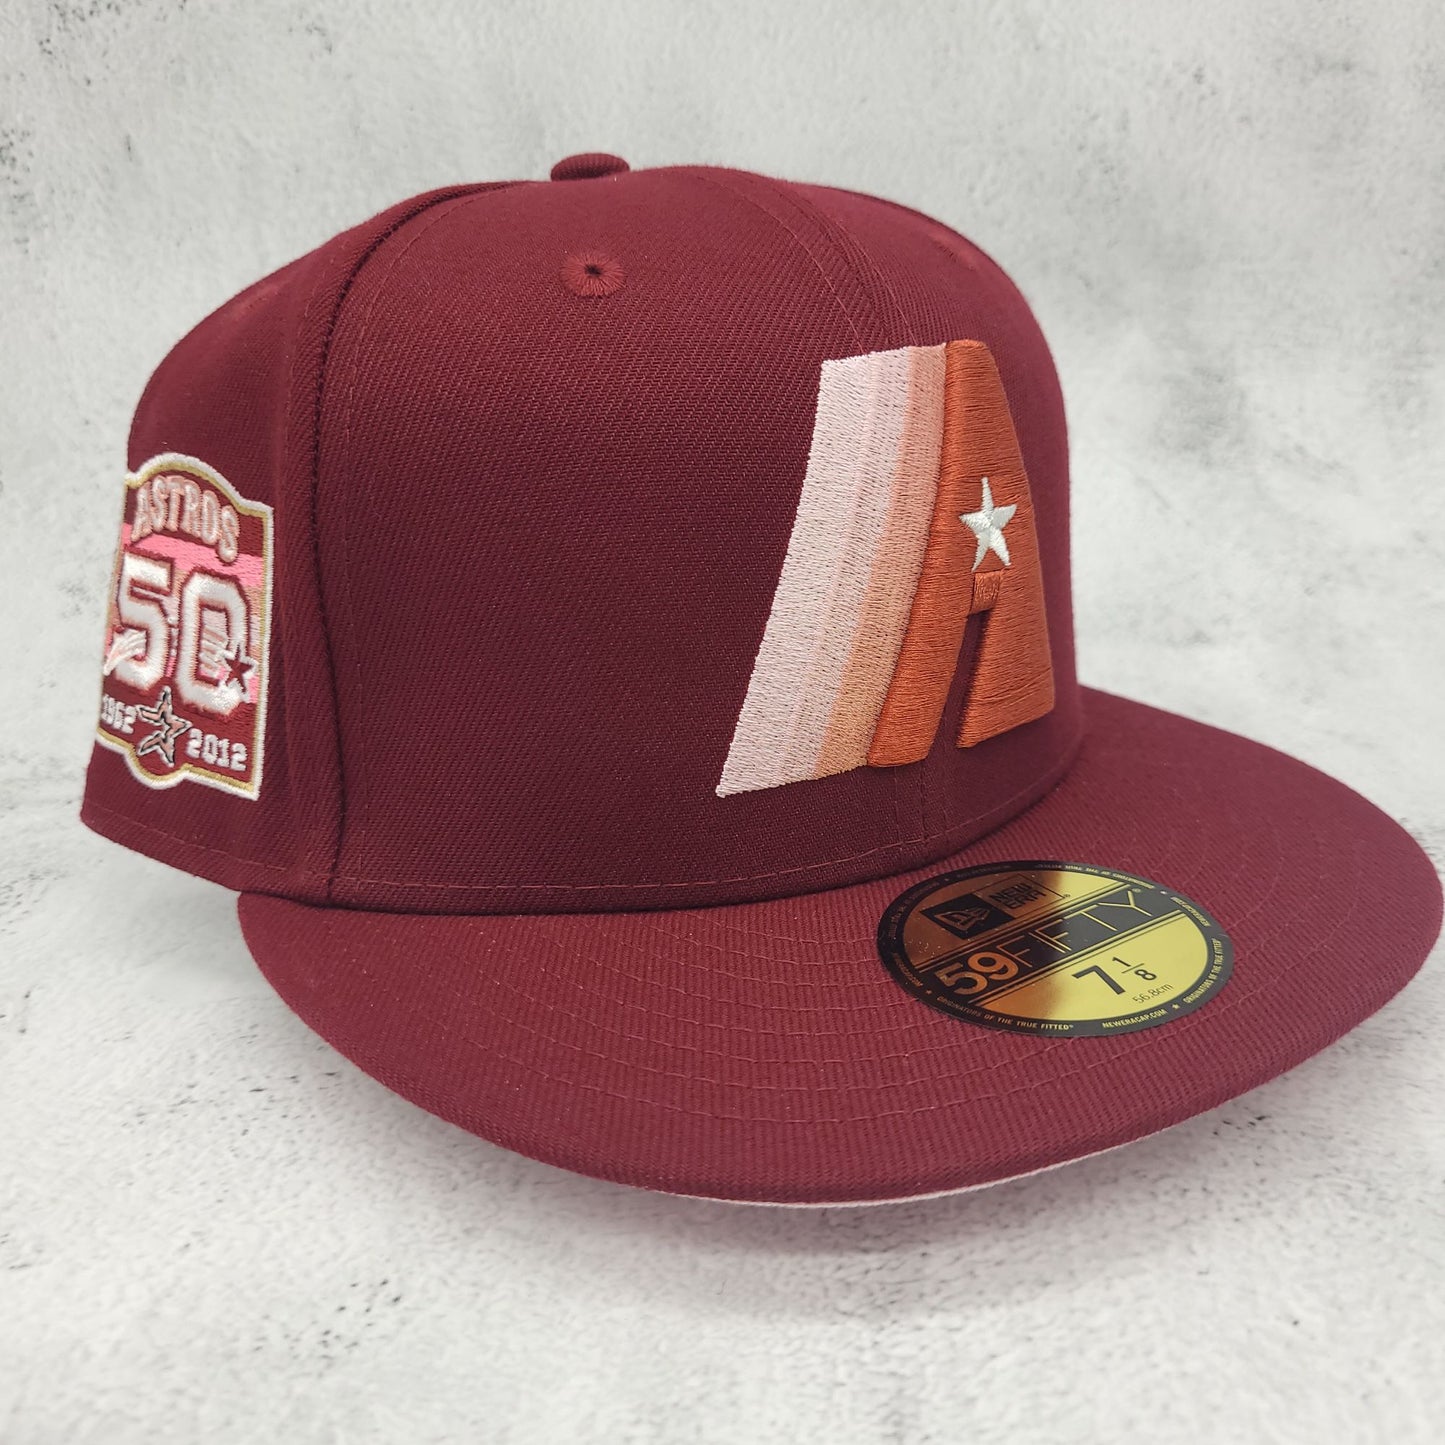 Red Velvet Houston Astros Hat Club for Sale in Chandler, AZ - OfferUp